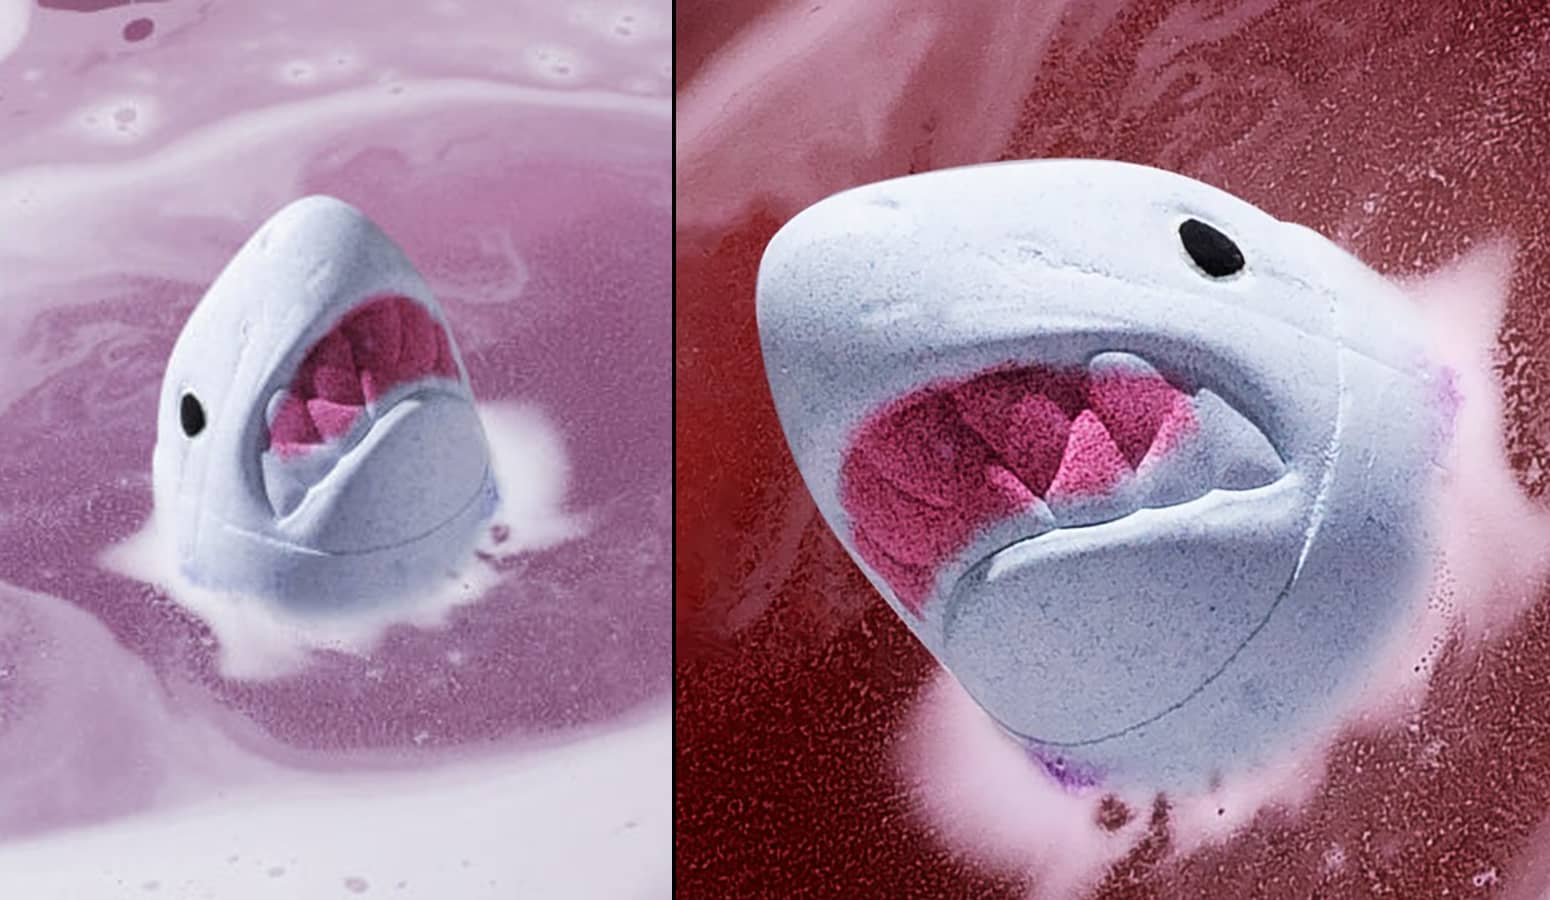 Shark Attack Bath Bomb - Turns Your Tub Into a Bloodbath!